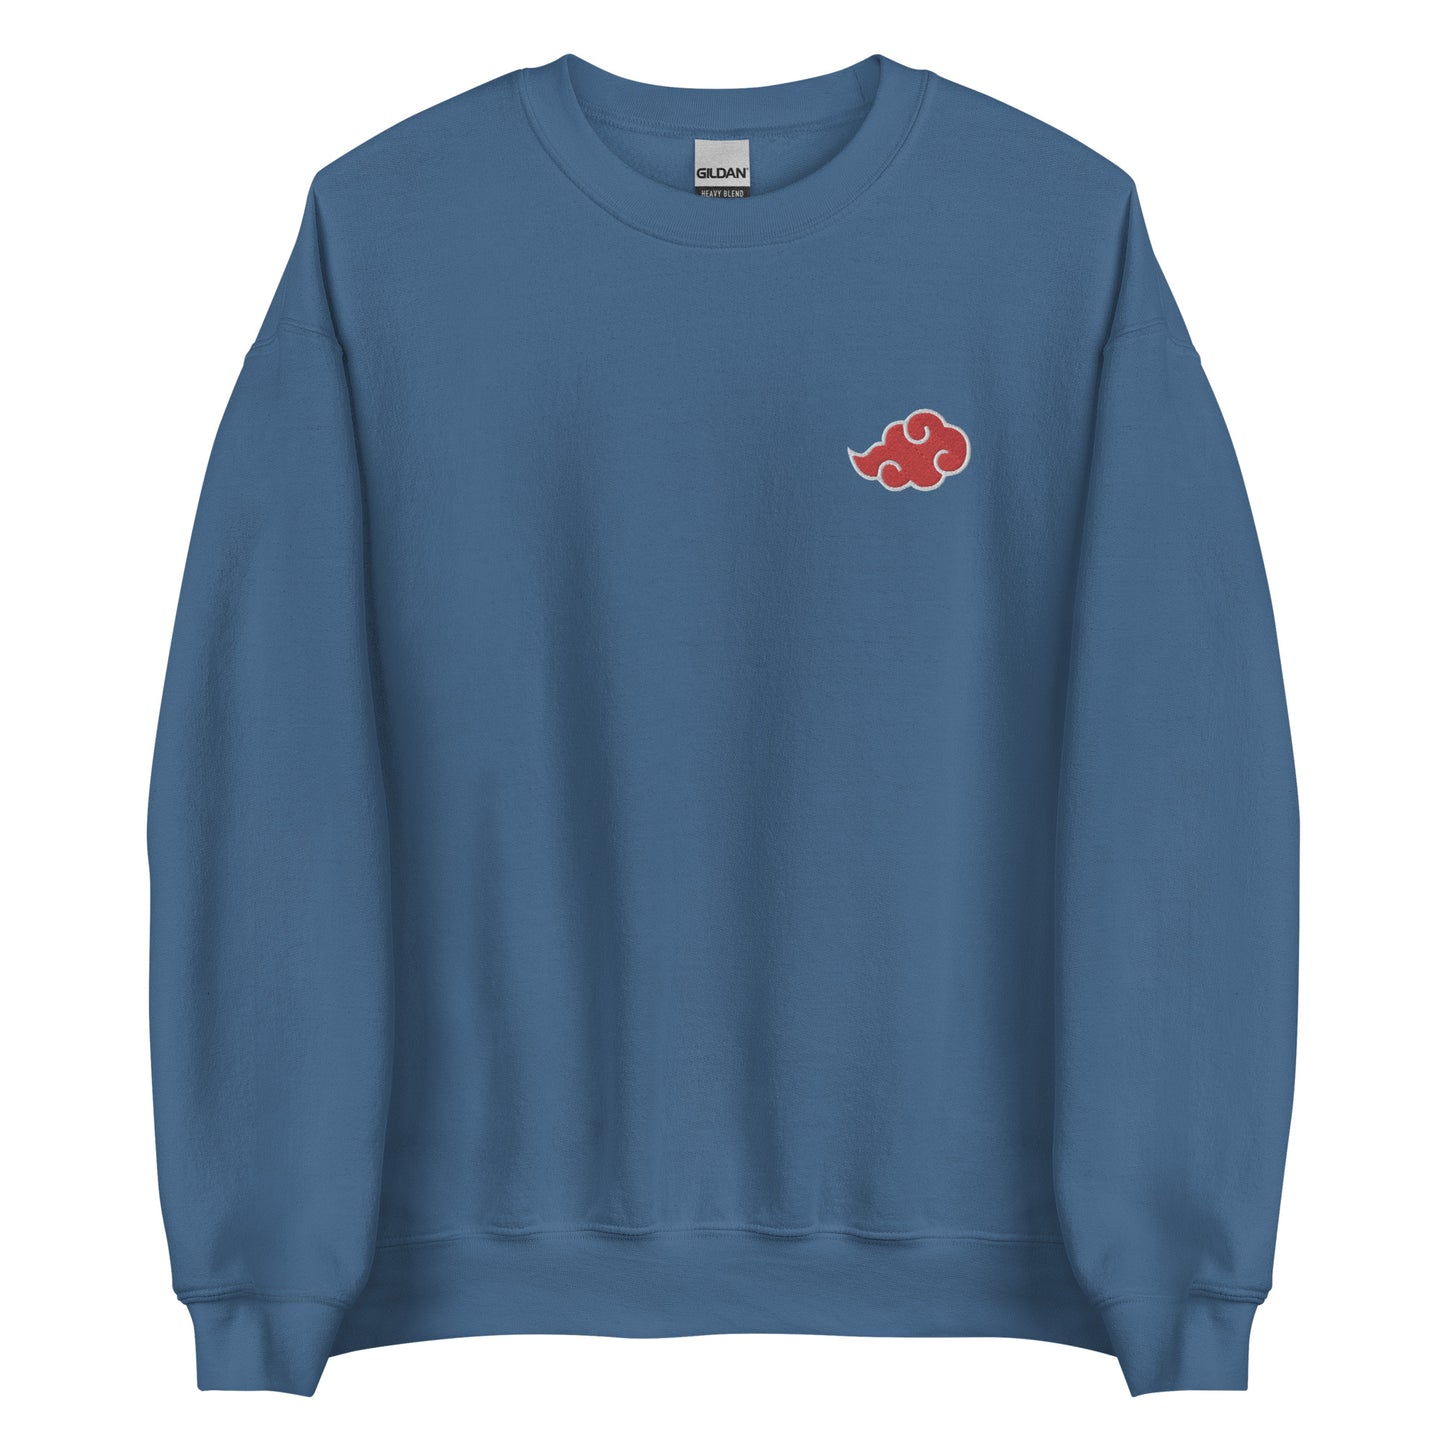 Anime Cloud Embroidered Sweatshirt